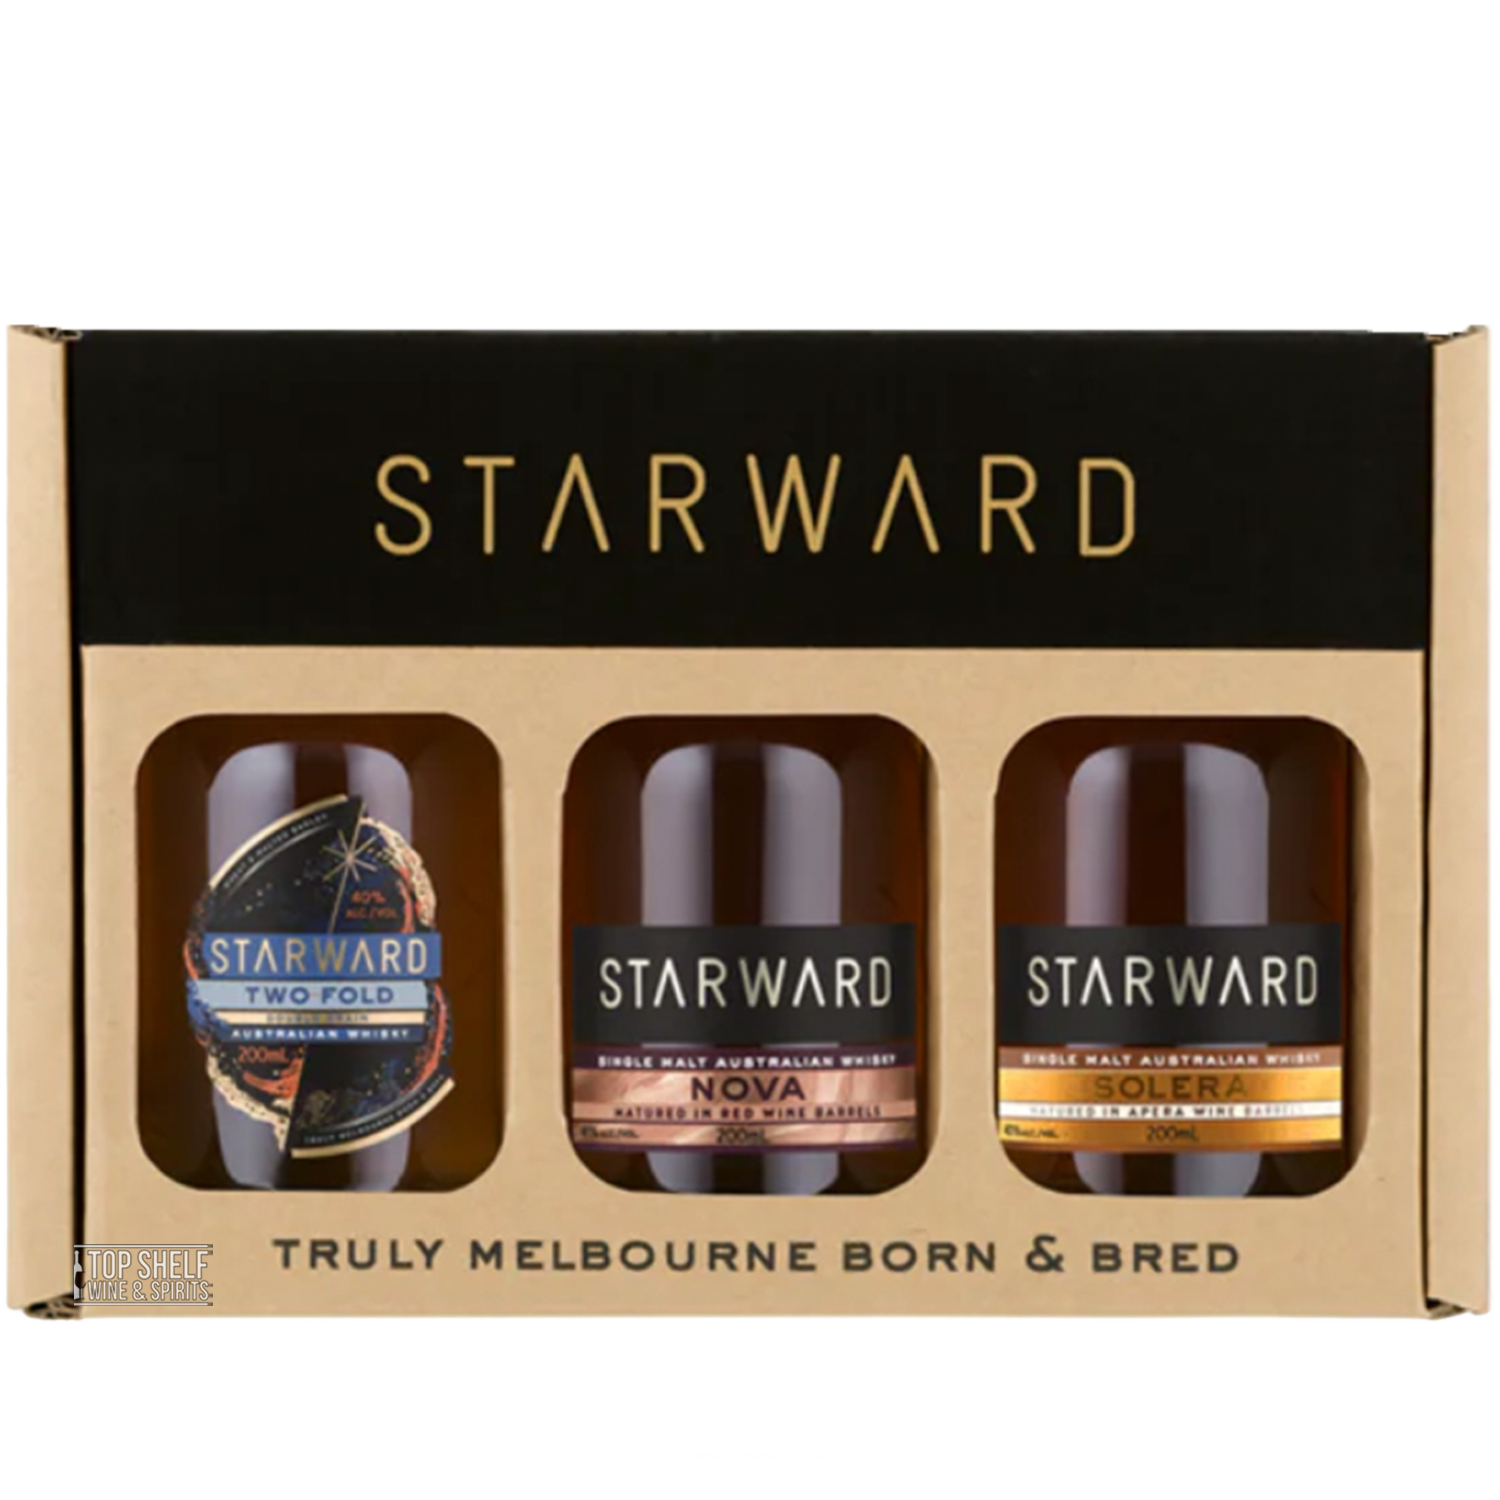 Starward Gift Pack 200mL (3 Pack)